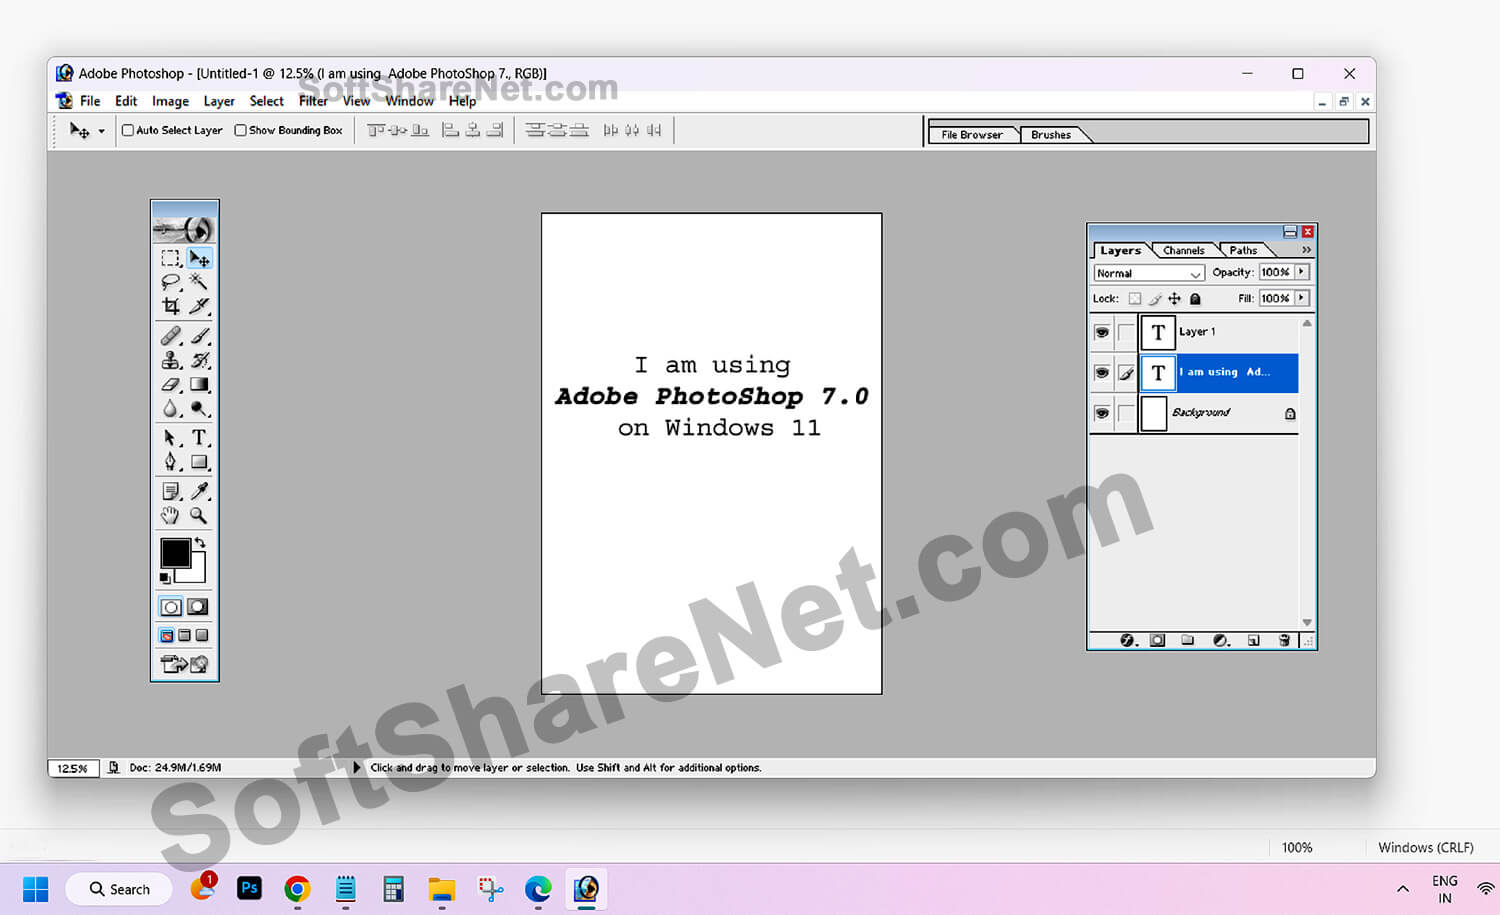 Adobe Photoshop 7.0 Supports Windows 11